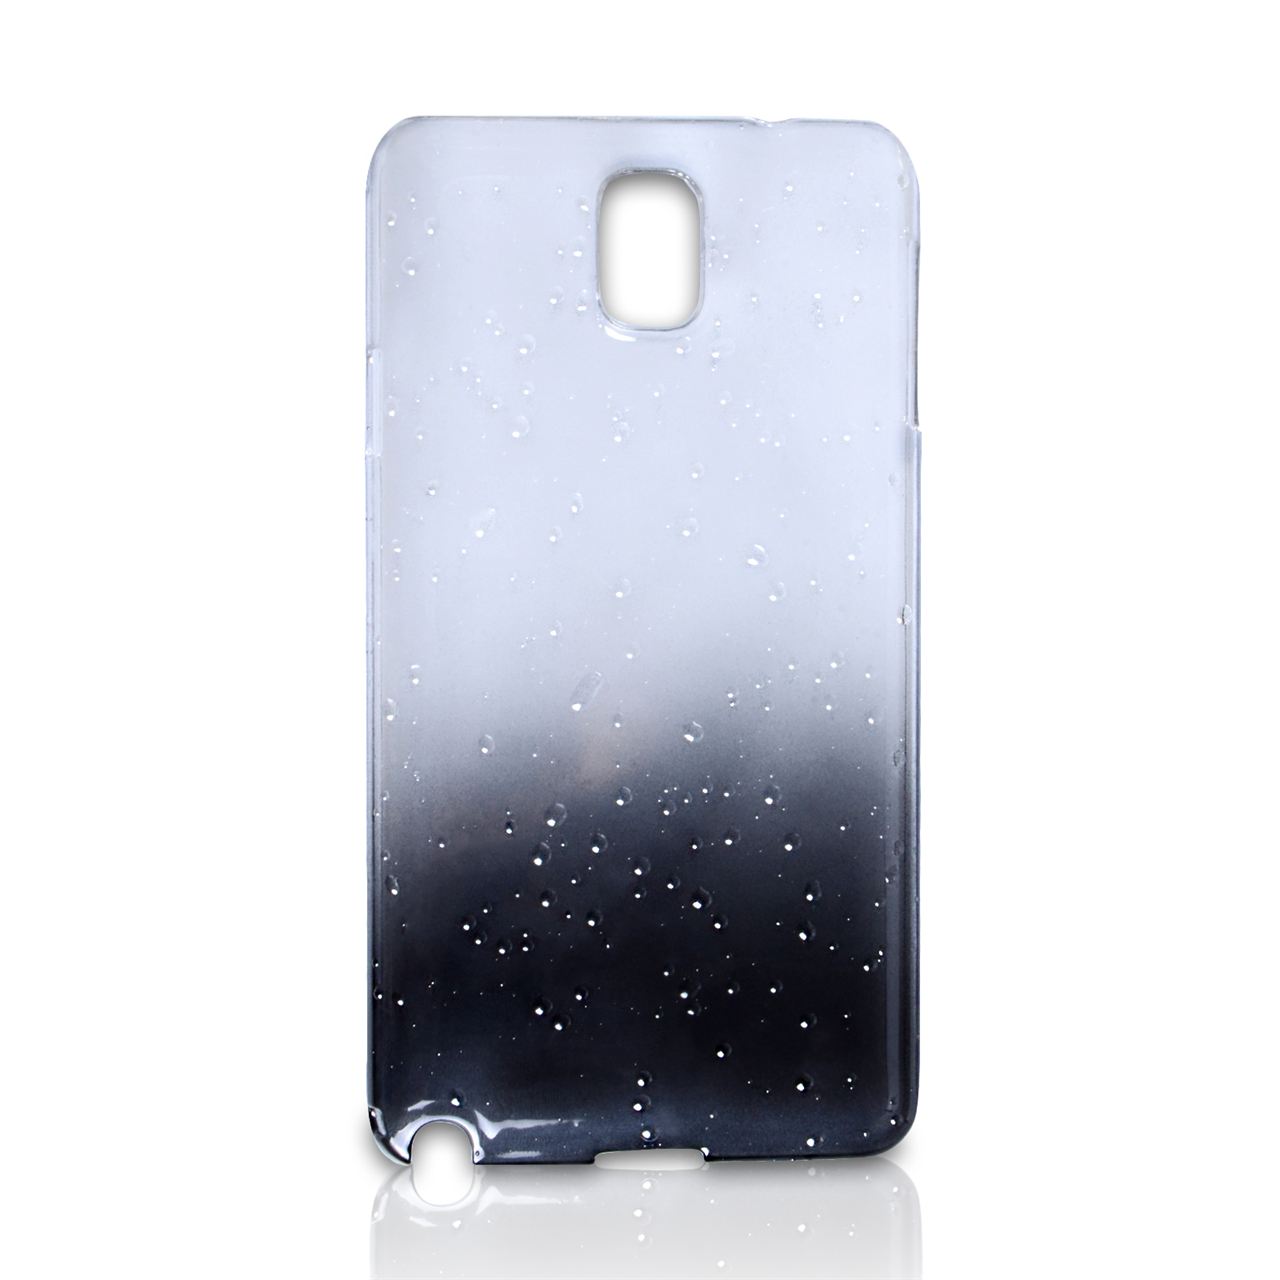 YouSave Accessories Samsung Galaxy Note 3 Waterdrop Hard Case - Black